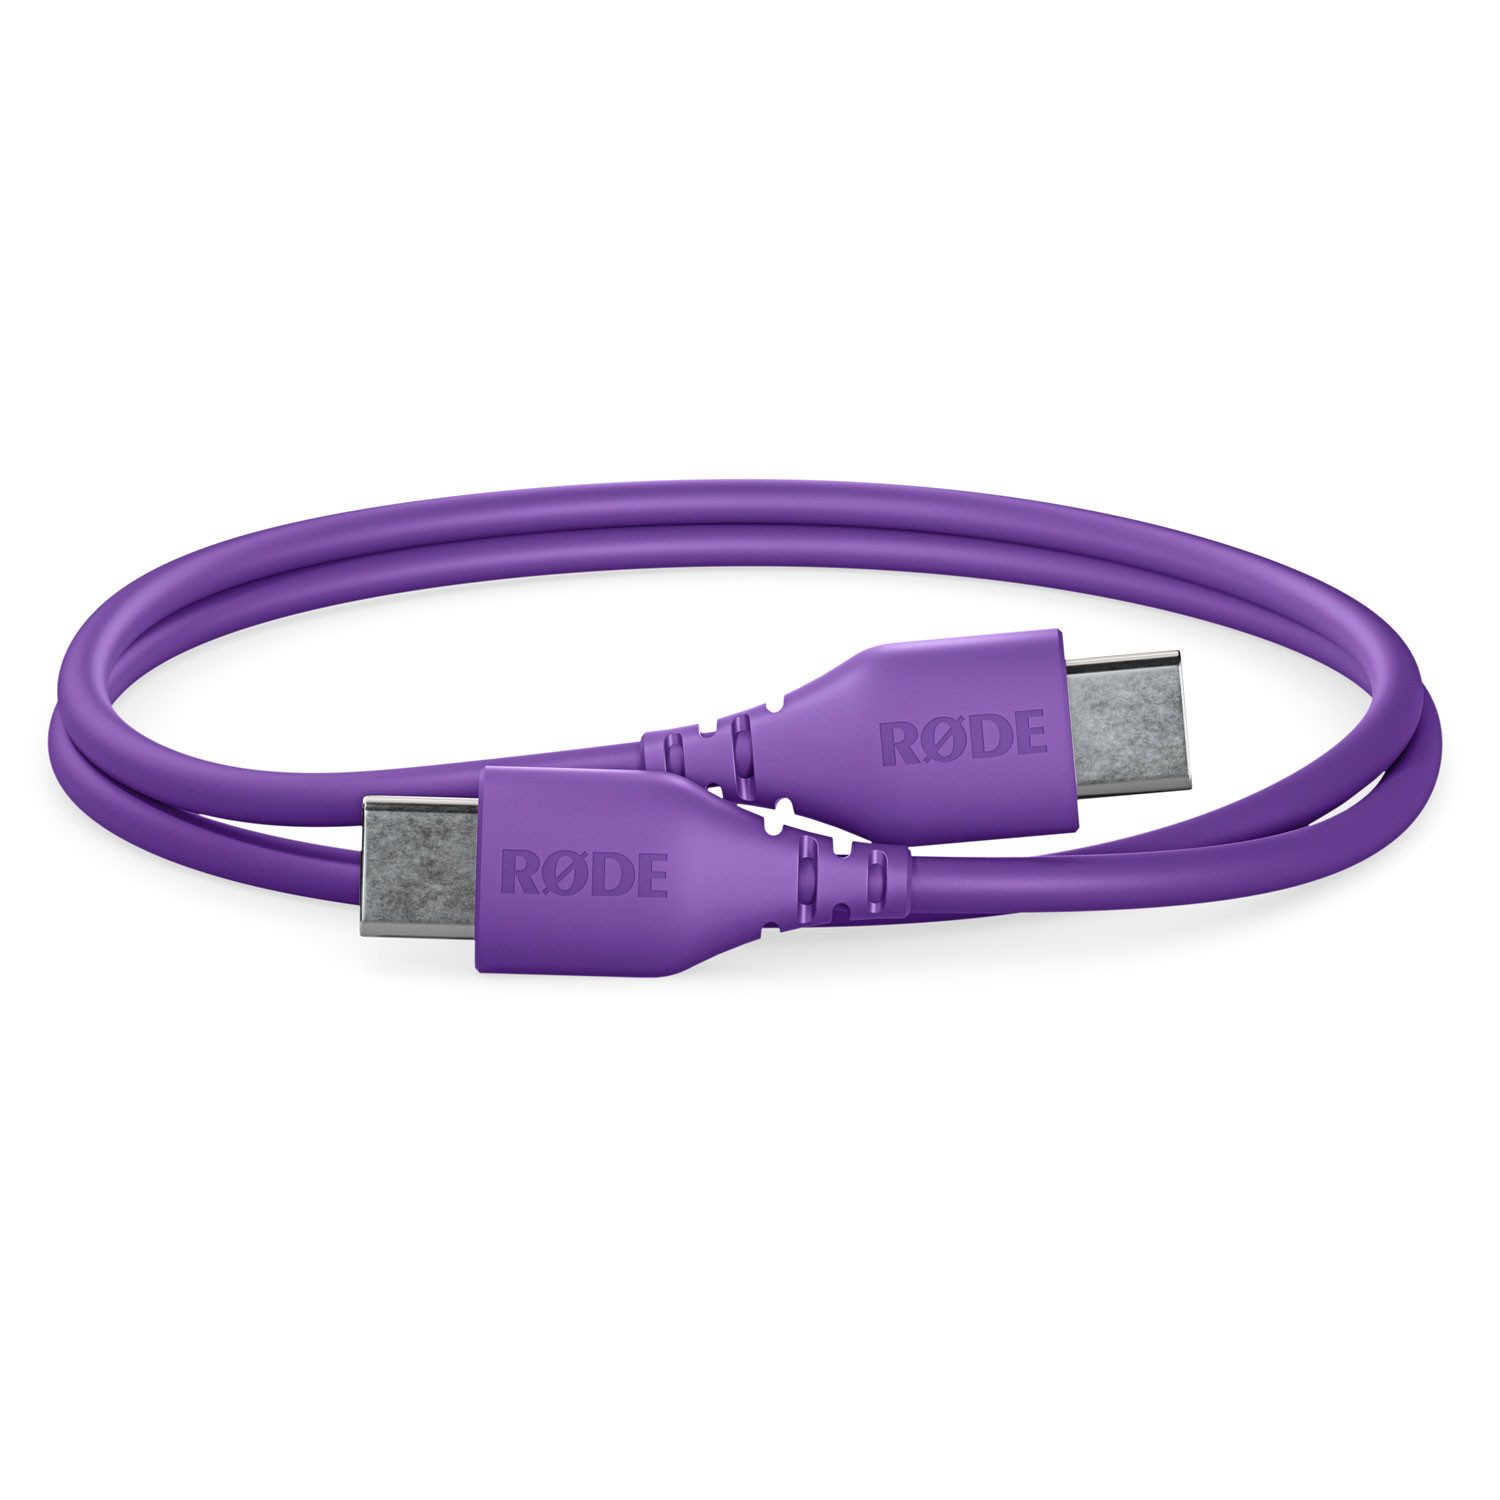 RØDE SC22-PU Hi-Speed USB-Kabel, USB-C, auf USB-C (30 cm), Lila